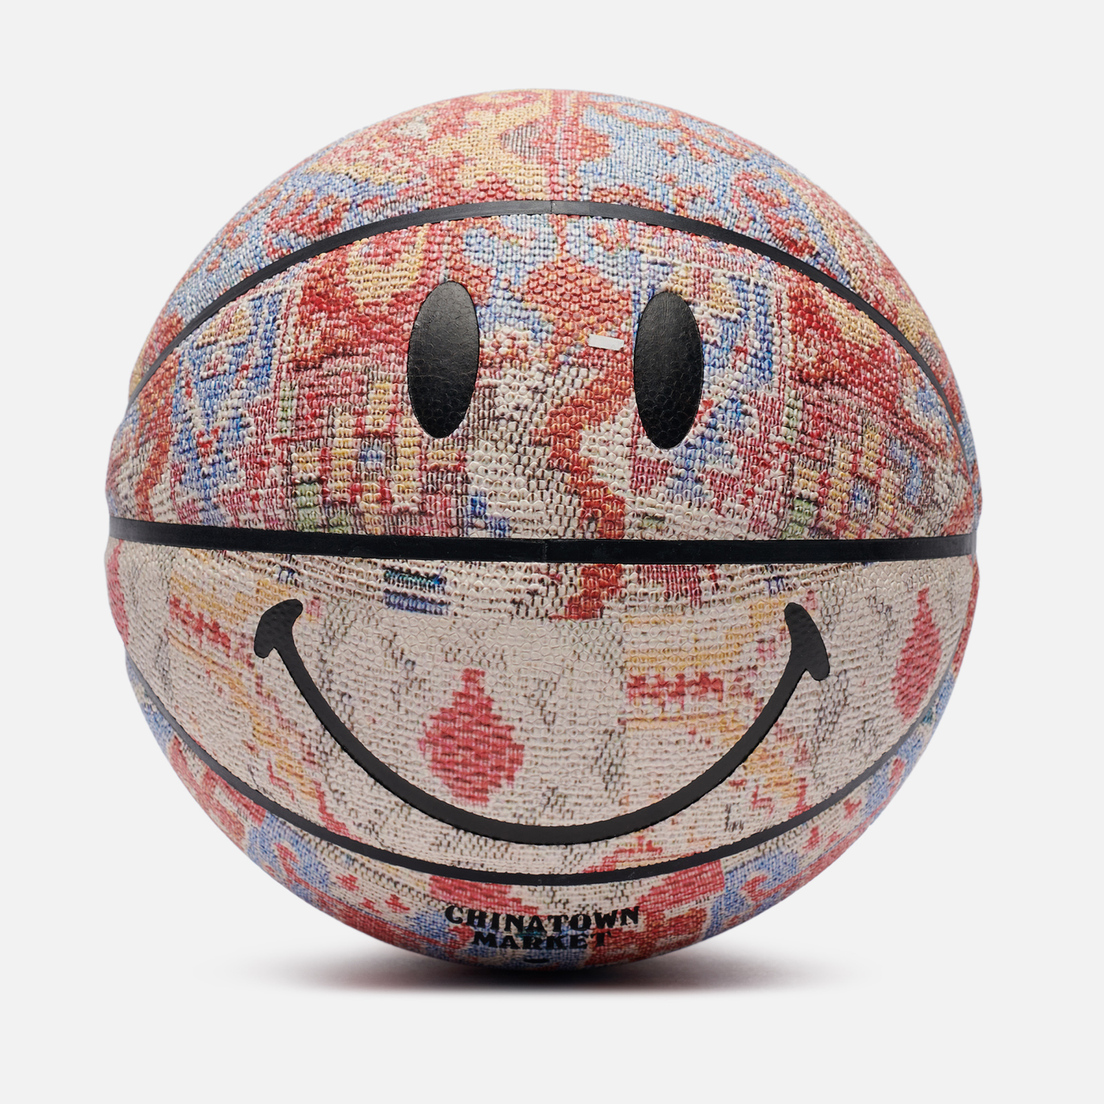 Chinatown Market Баскетбольный мяч Smiley Patchwork Rug